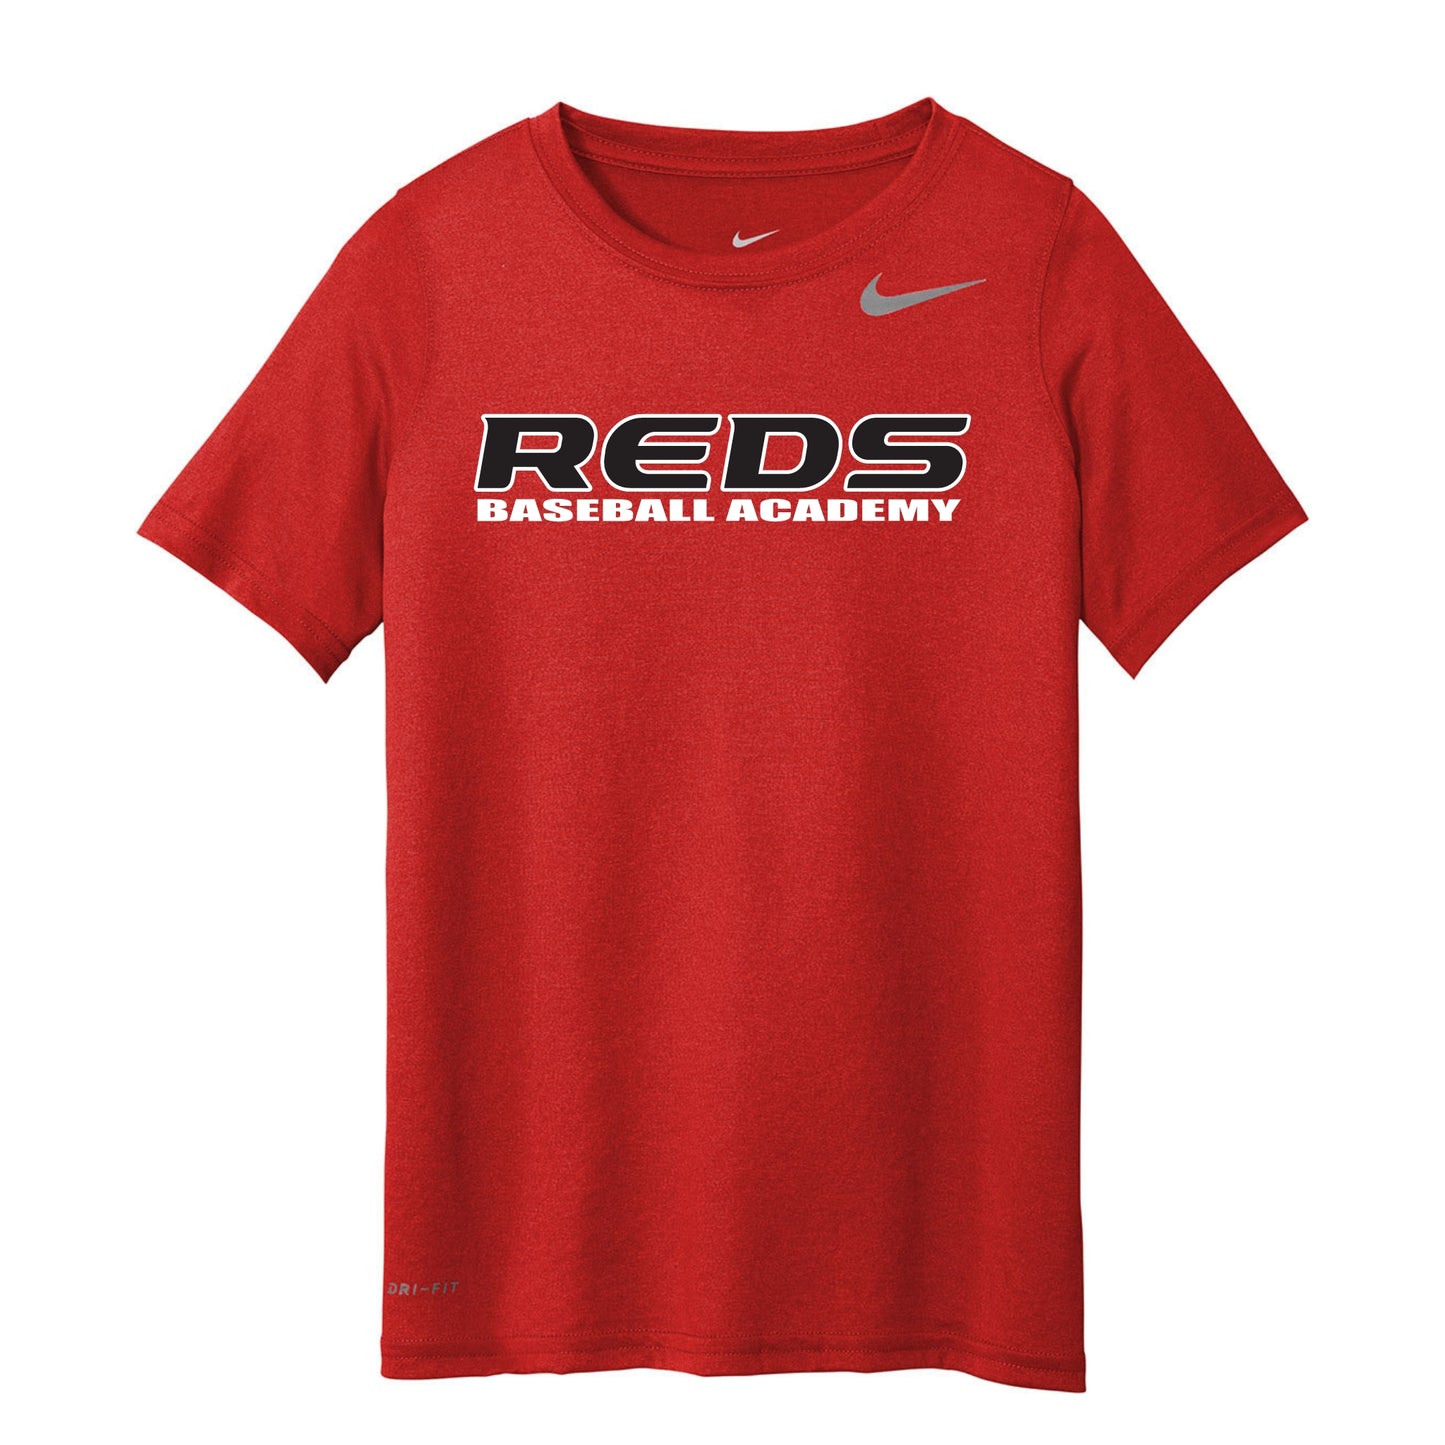 Reds Baseball Academy Nike Youth Legend Tee